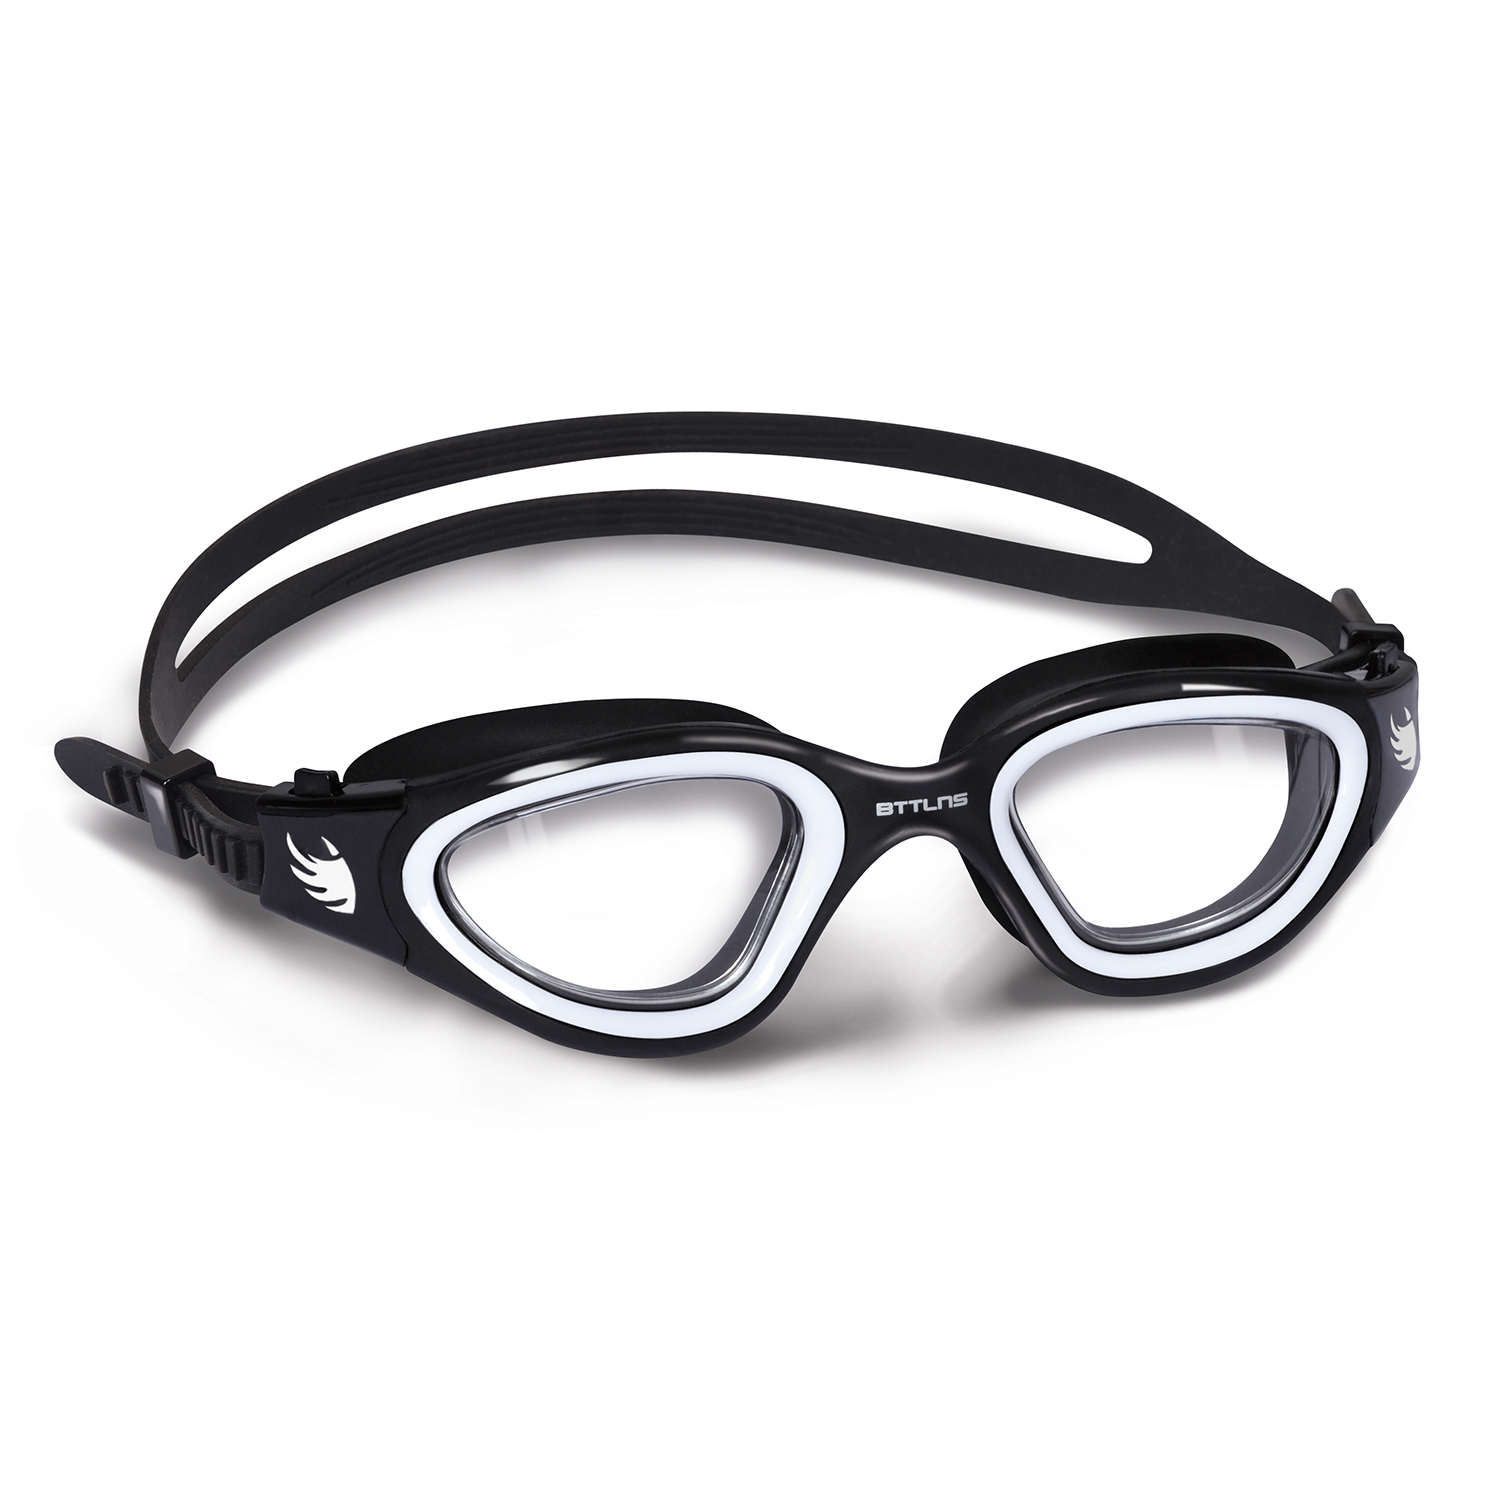 BTTLNS clear lens goggles black/white Ghiskar 1.0  0119001-001